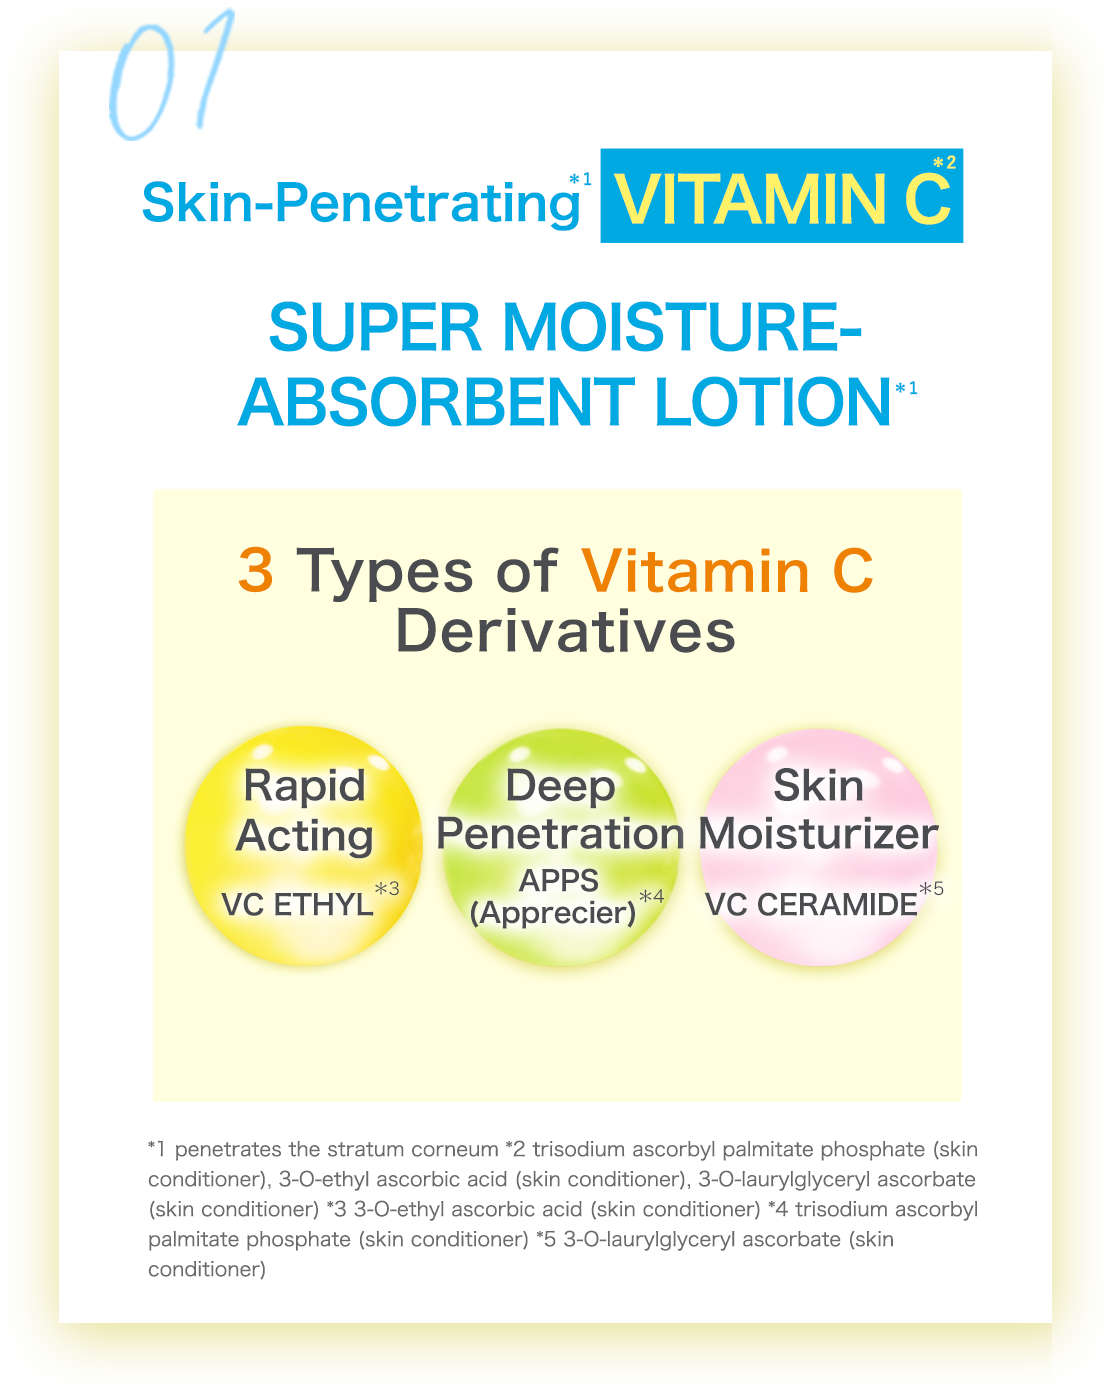 Skin-Penetrating*1 VITAMIN C SUPER MOISTURE-ABSORBENT LOTION